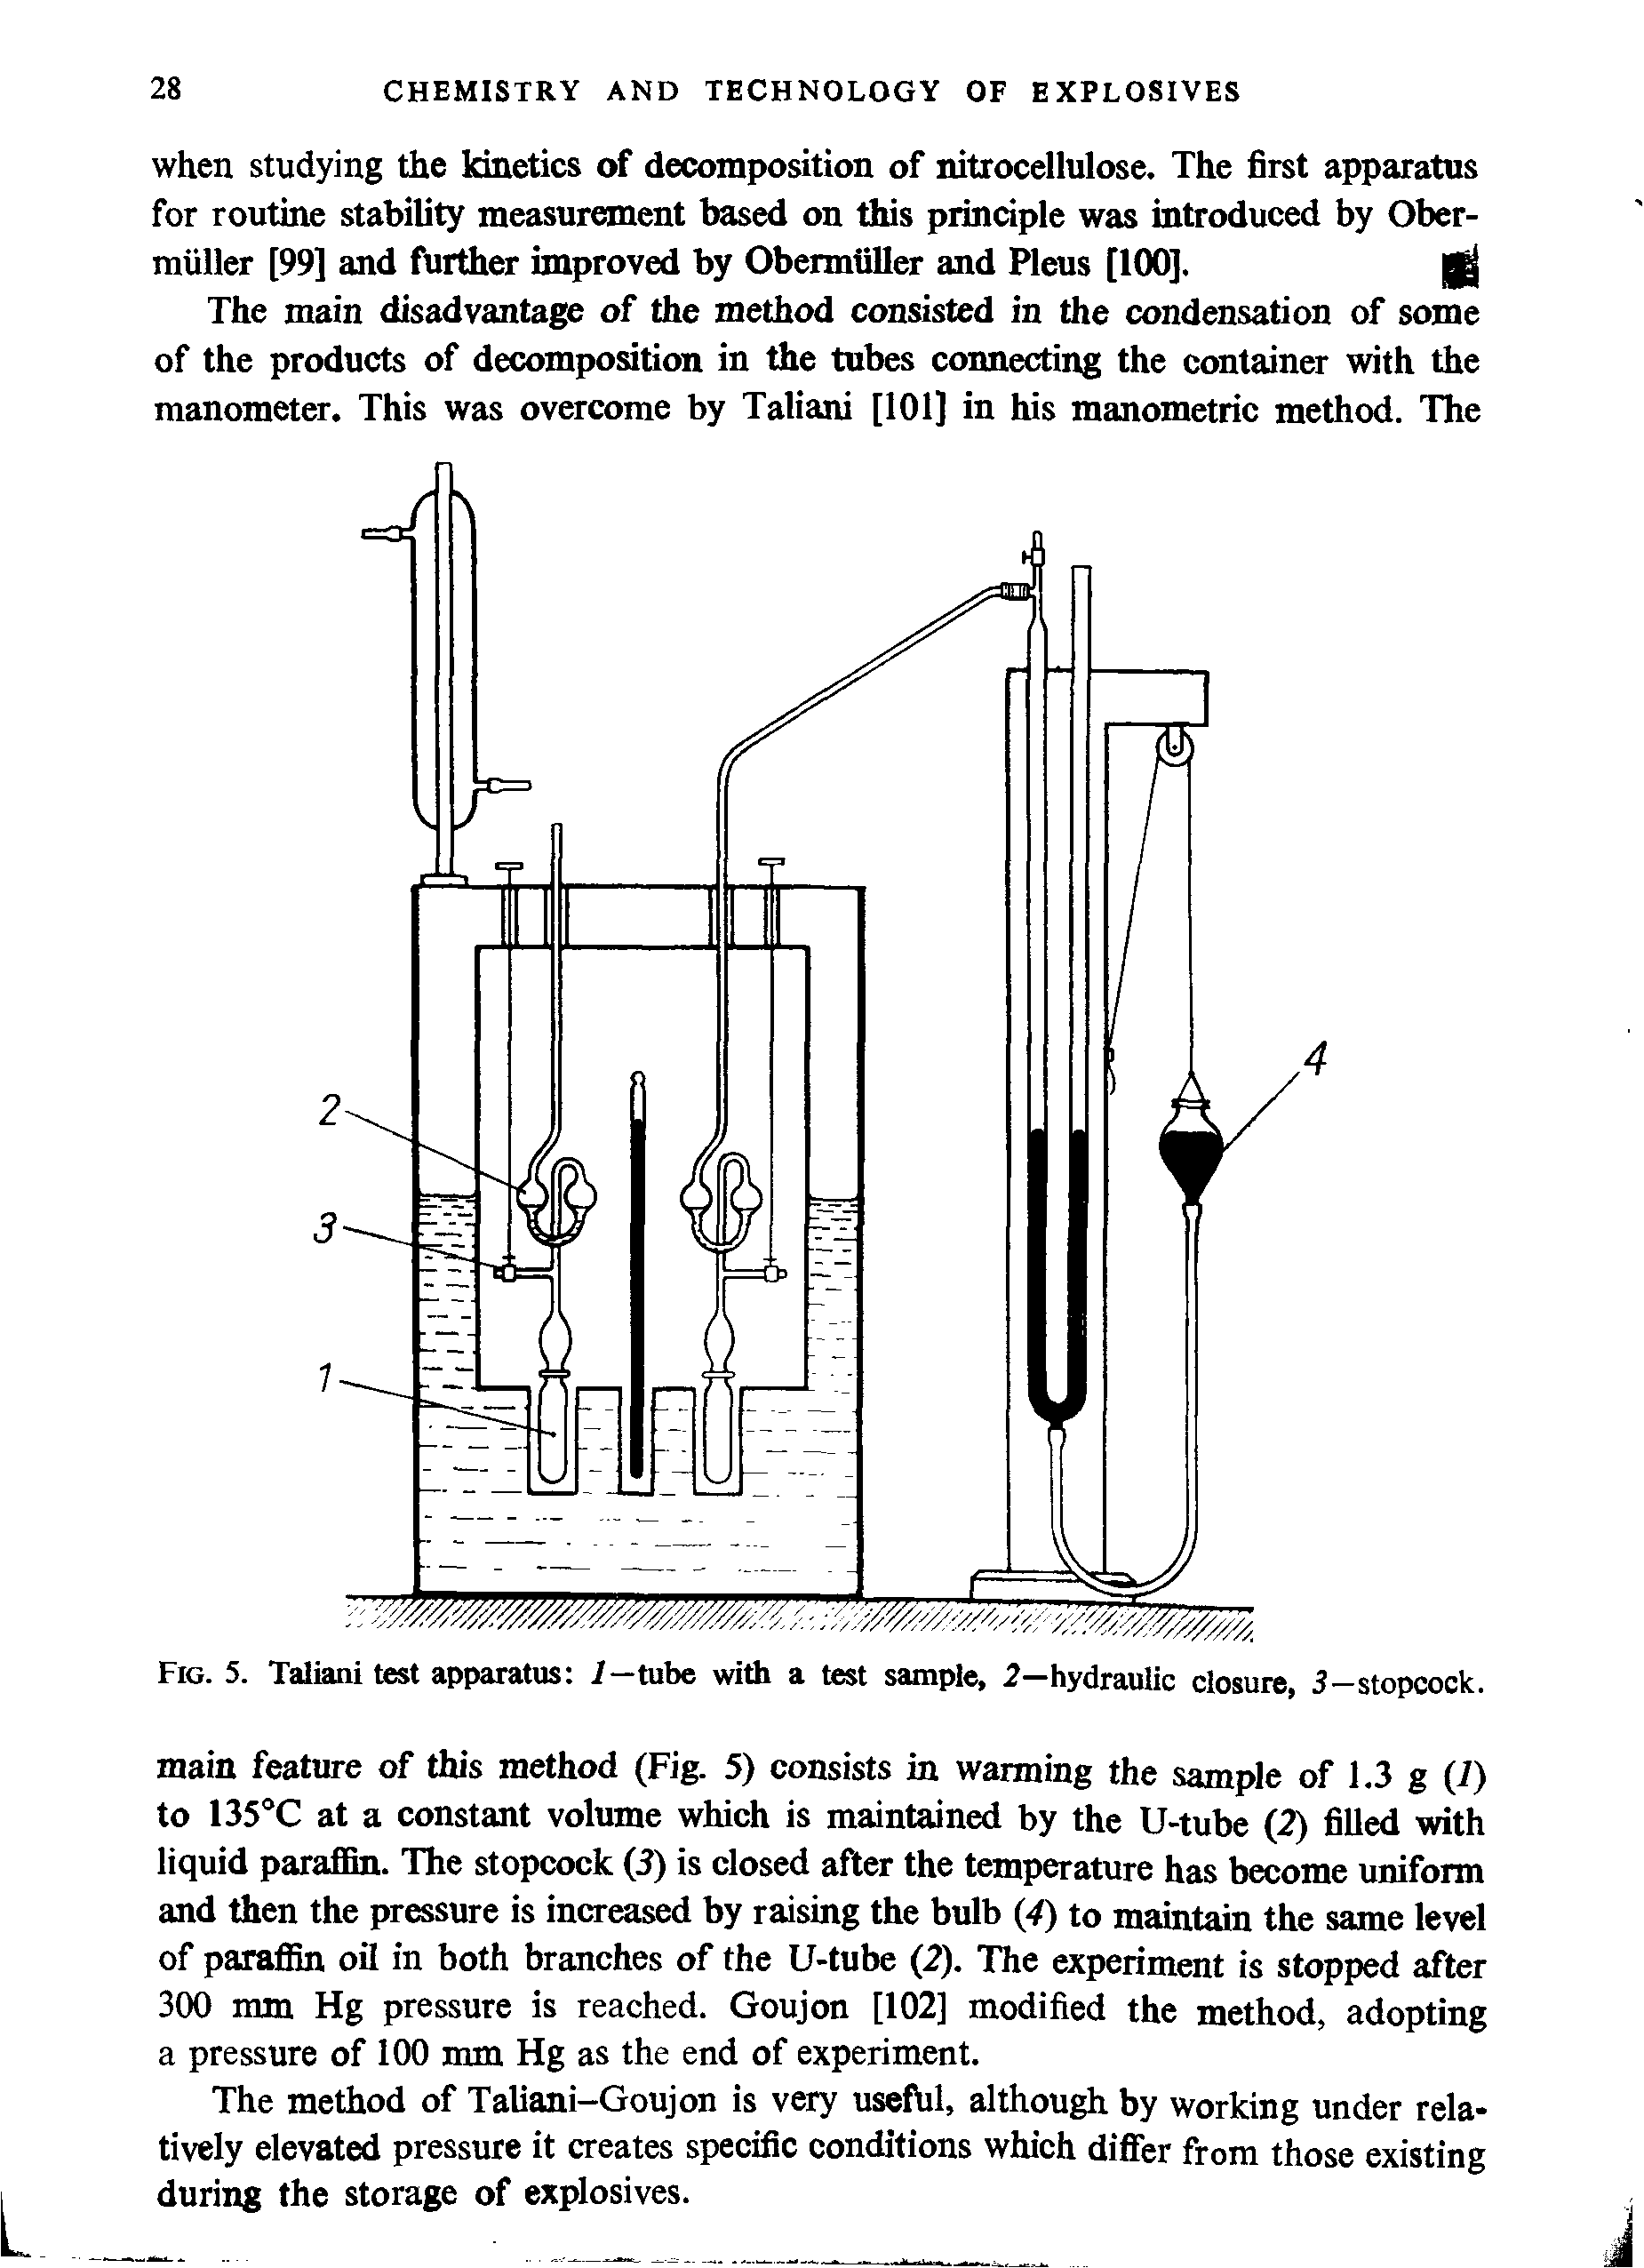 Fig. 5. Taliani test apparatus 1—tube with a test sample, 2—hydraulic closure, 3-stopcock.